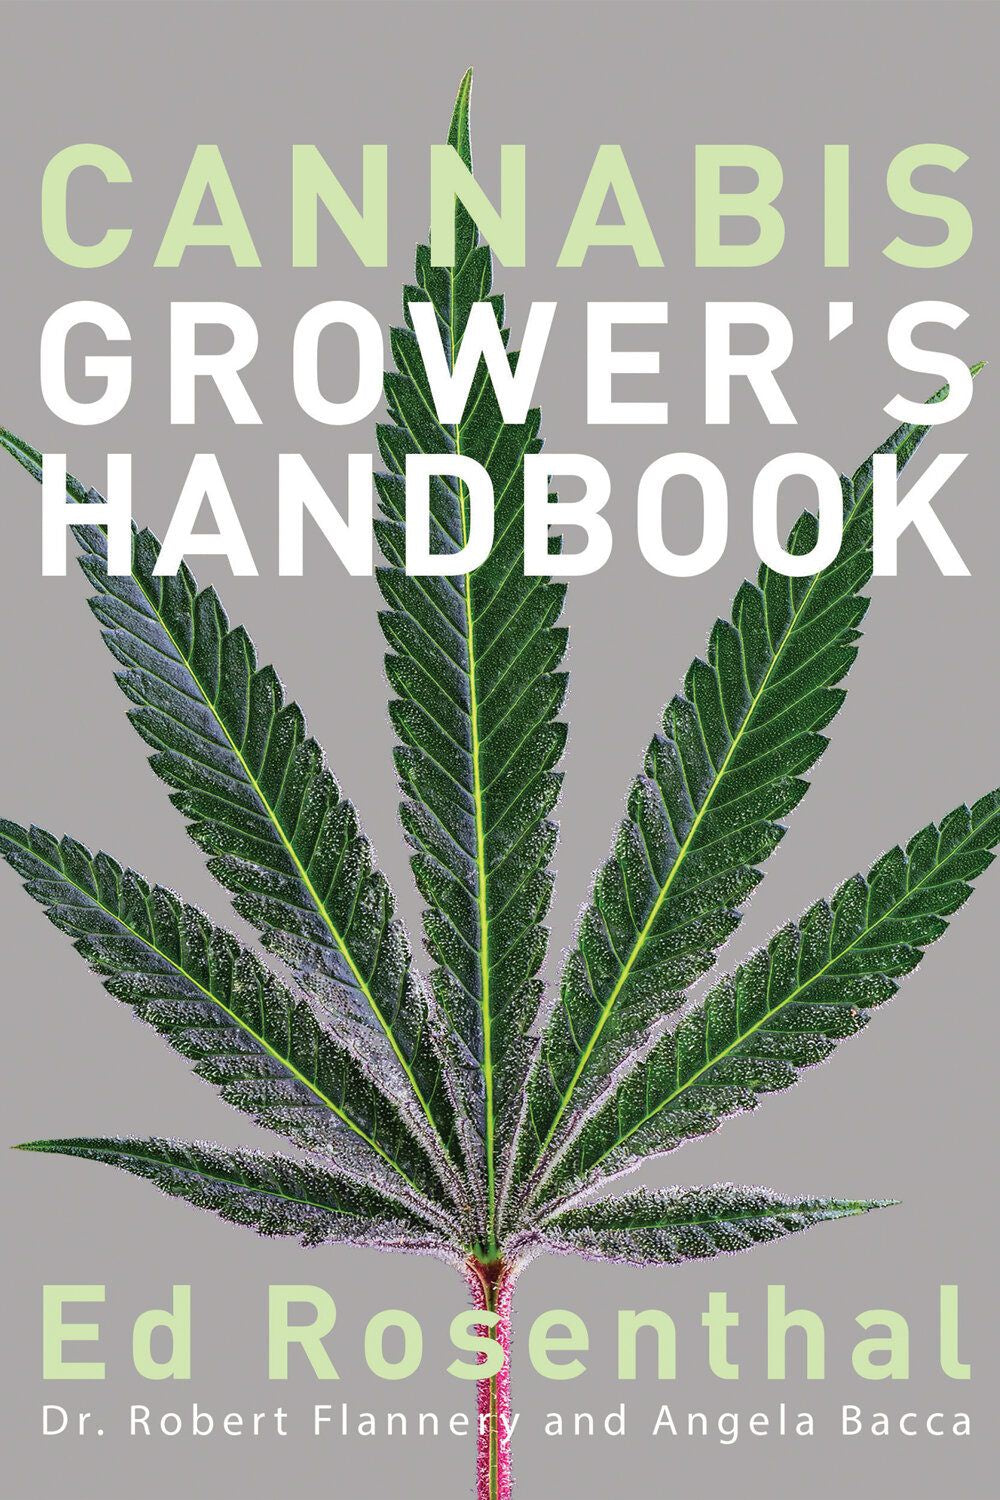 ED ROSENTHAL GROWERS HAND BOOK